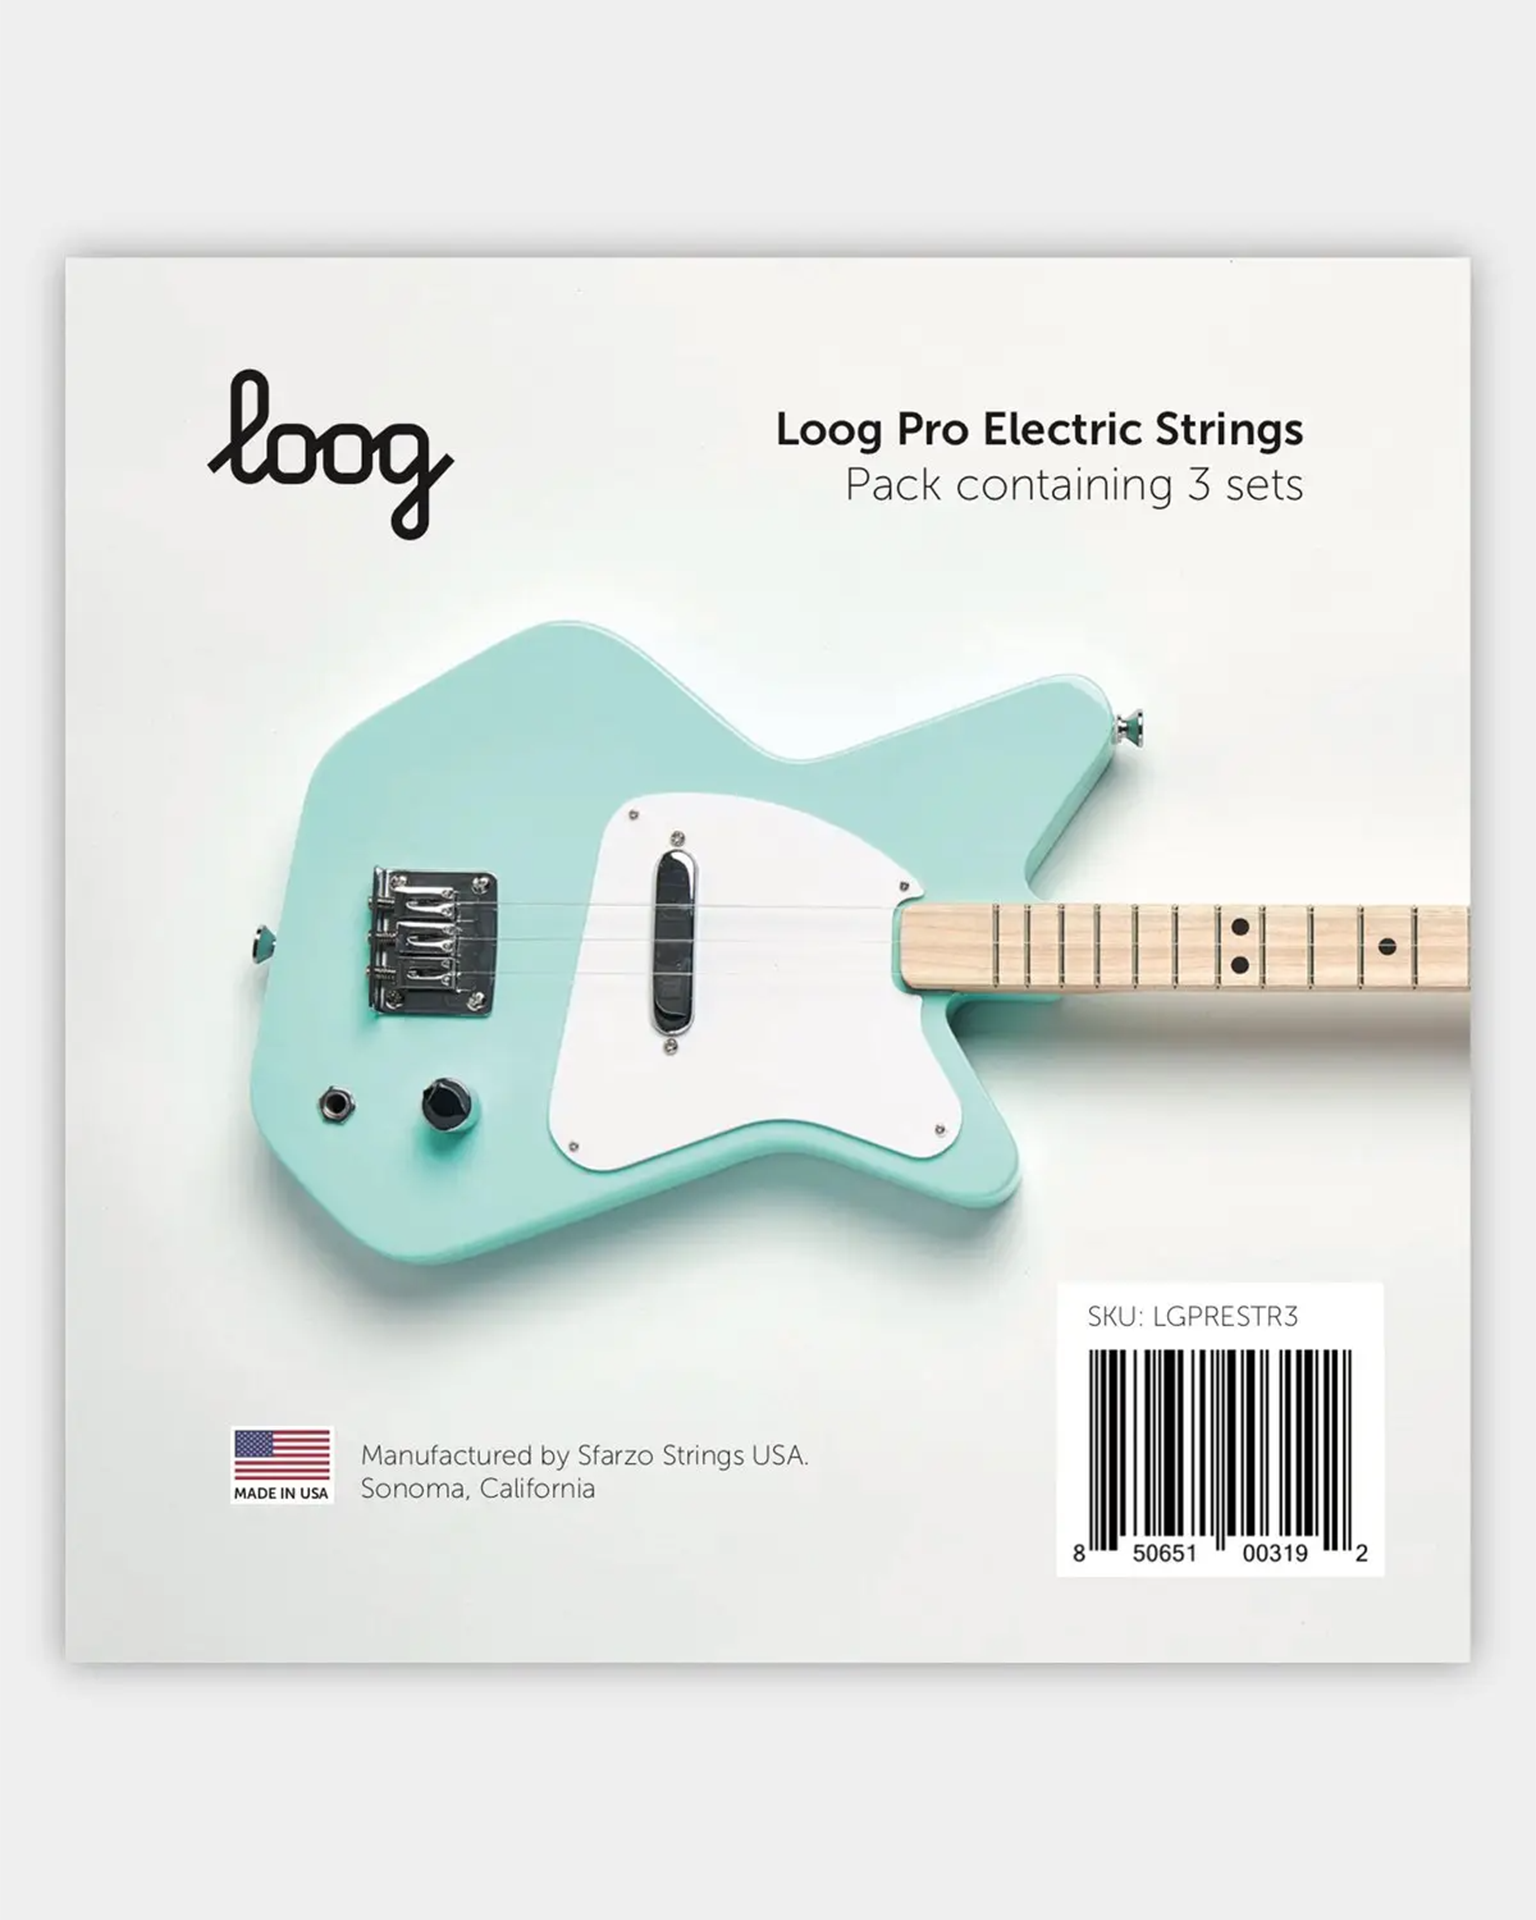 Little loog guitars play loog pro electric guitar strings